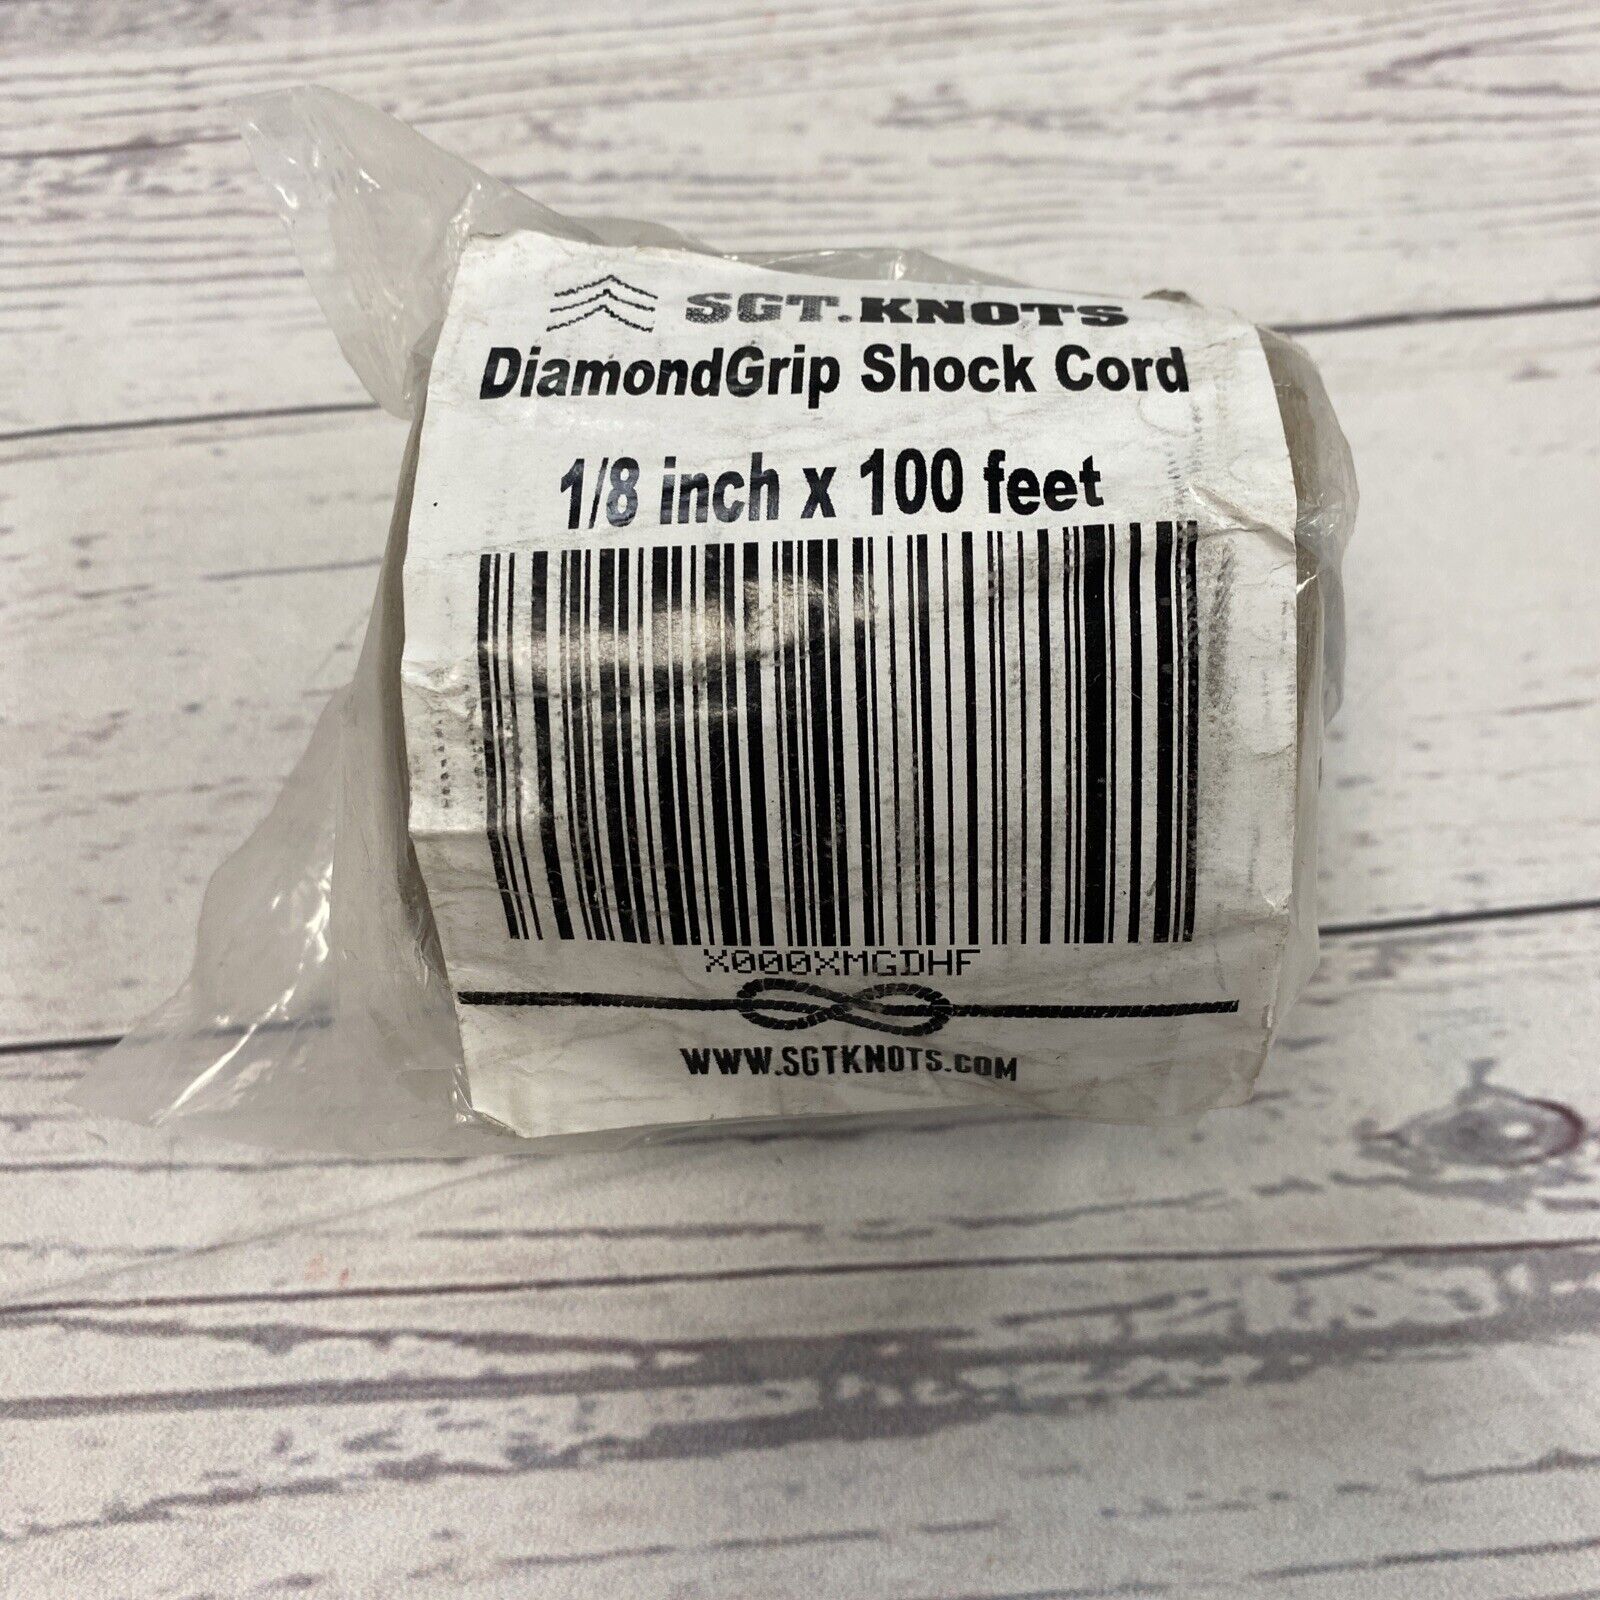 SGT KNOTS Shock Cord (1/8 inch) Diamond Grip - Black Elastic